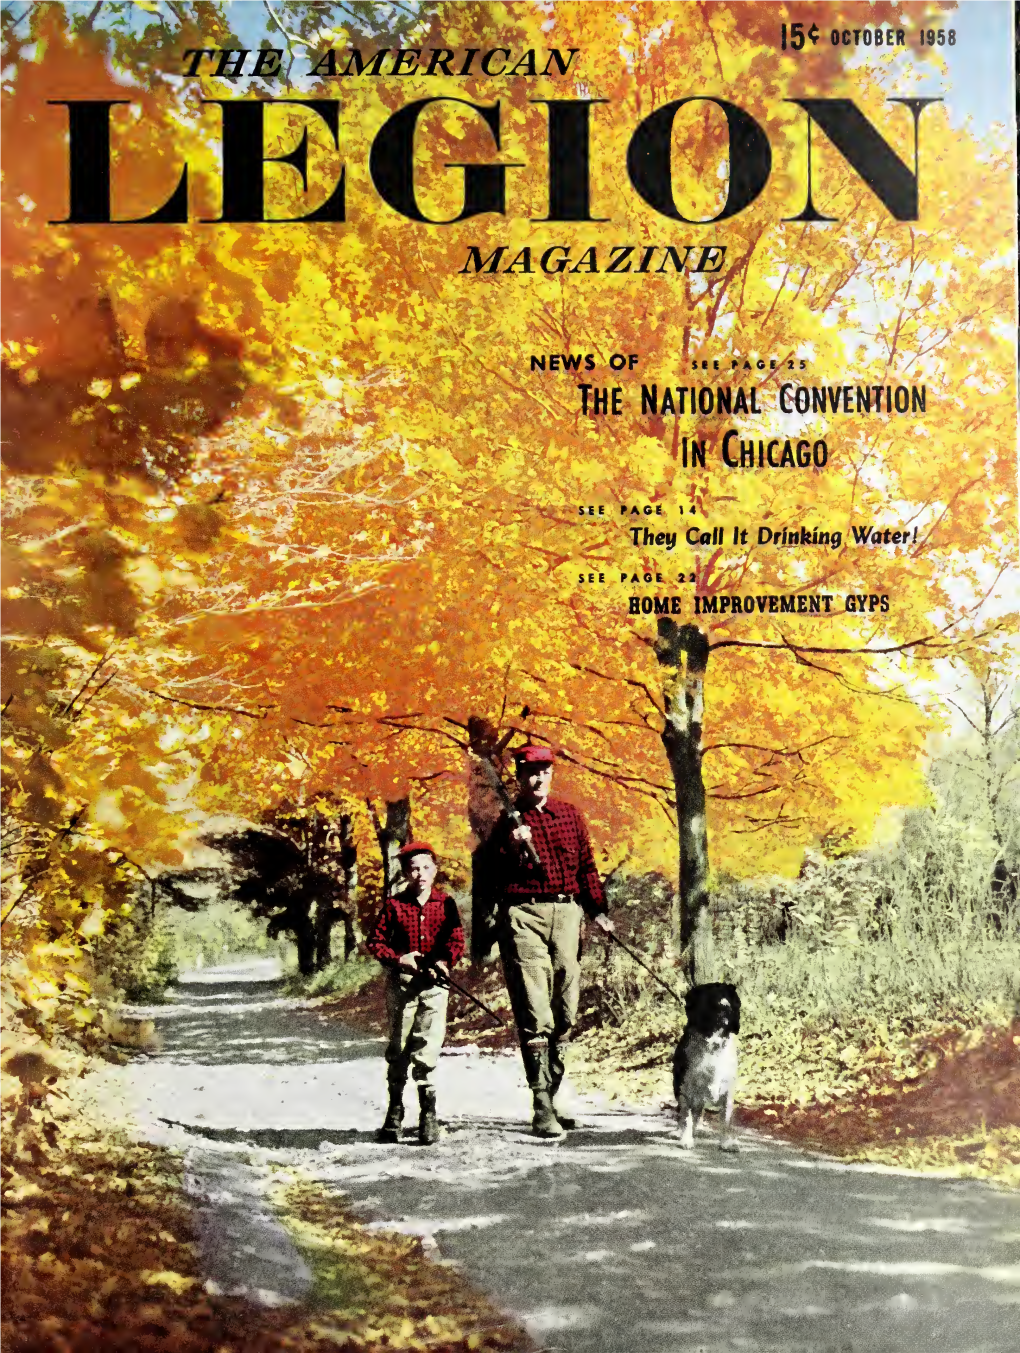 The American Legion Magazine [Volume 65, No. 4 (October 1958)]